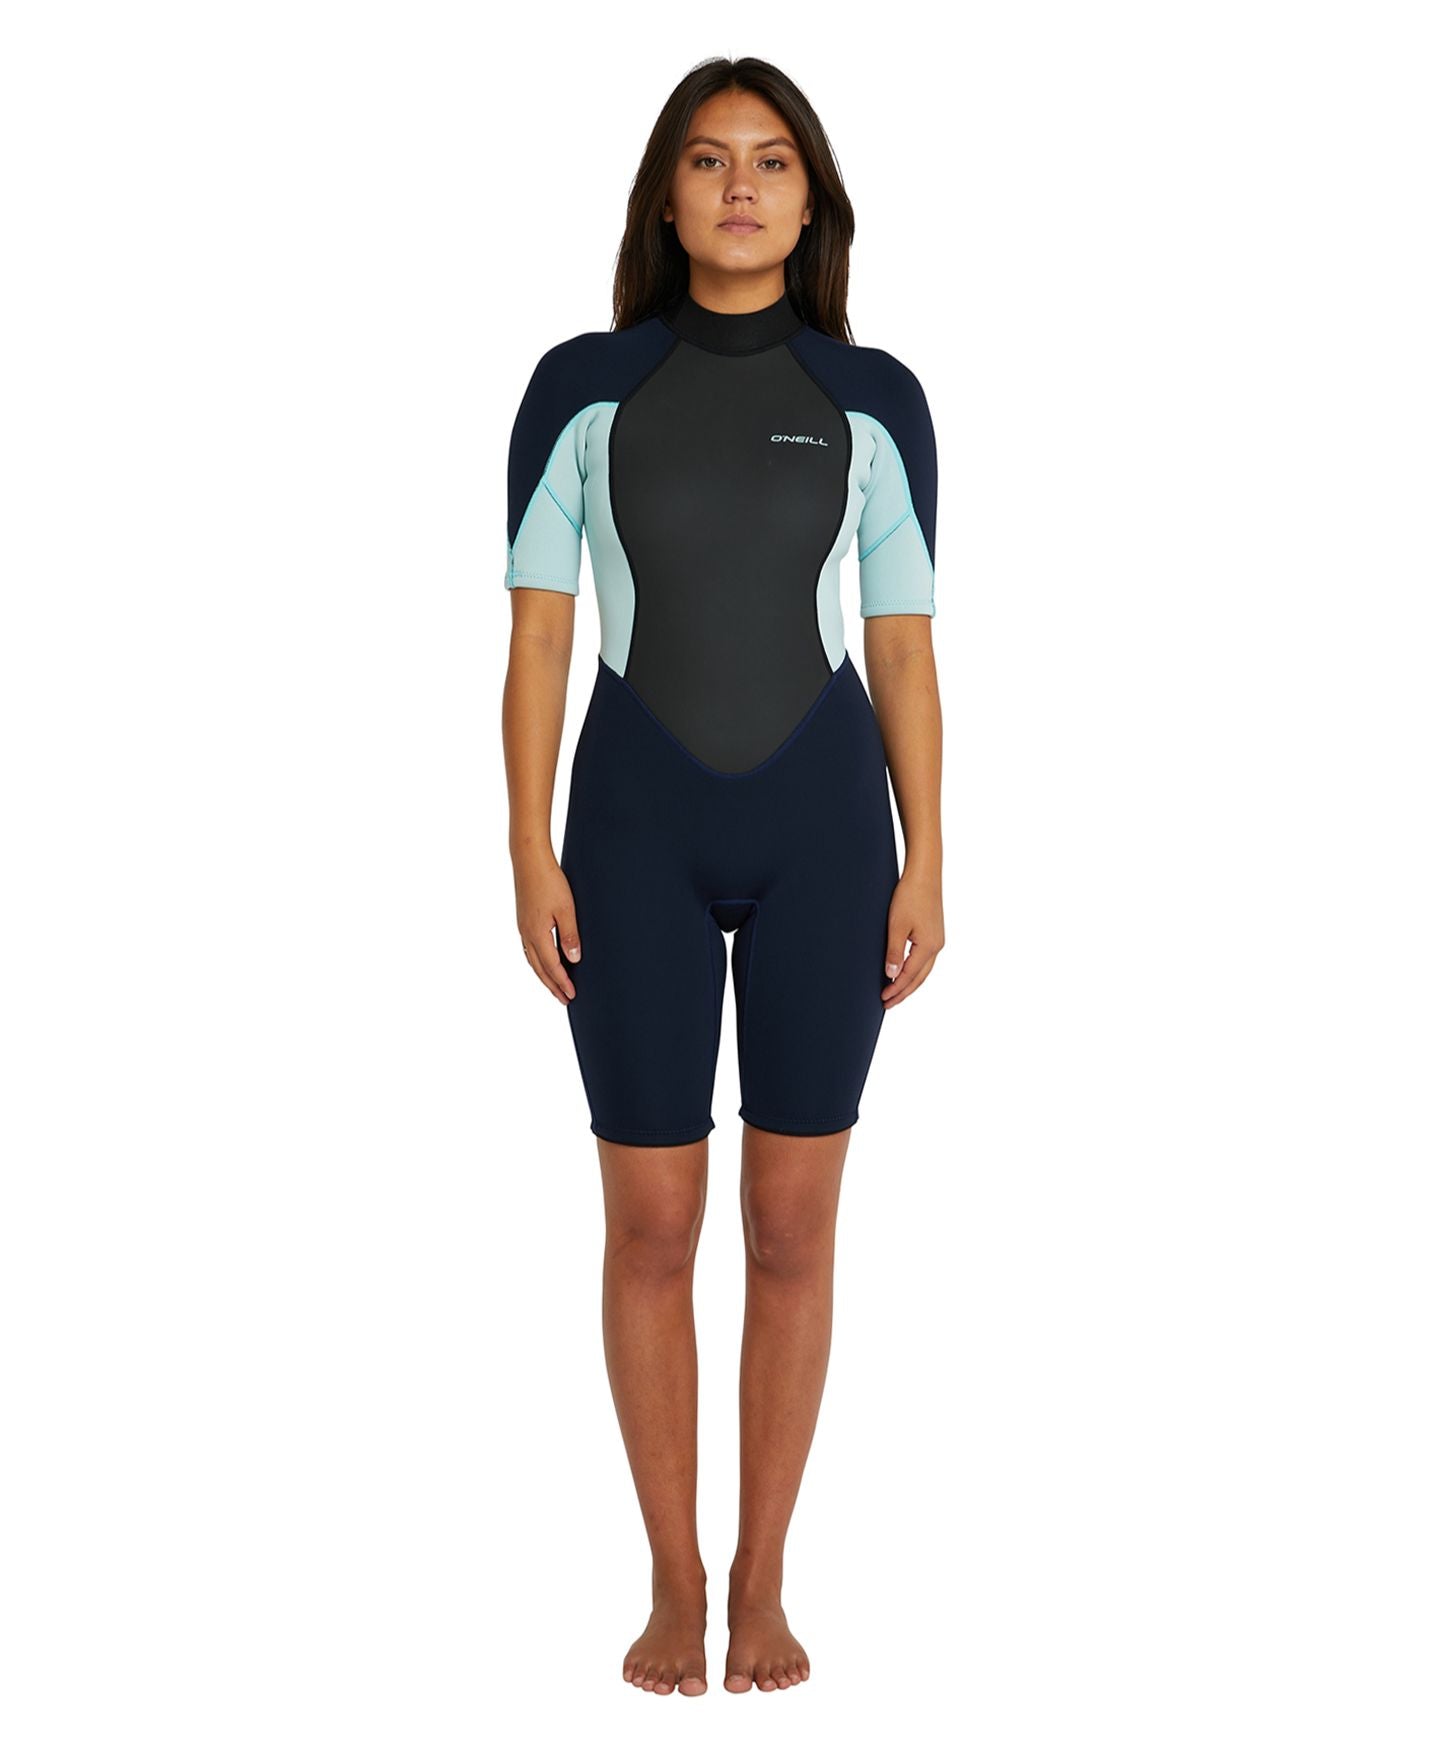 Women's Reactor II 2mm Spring Suit Wetsuit - Abyss